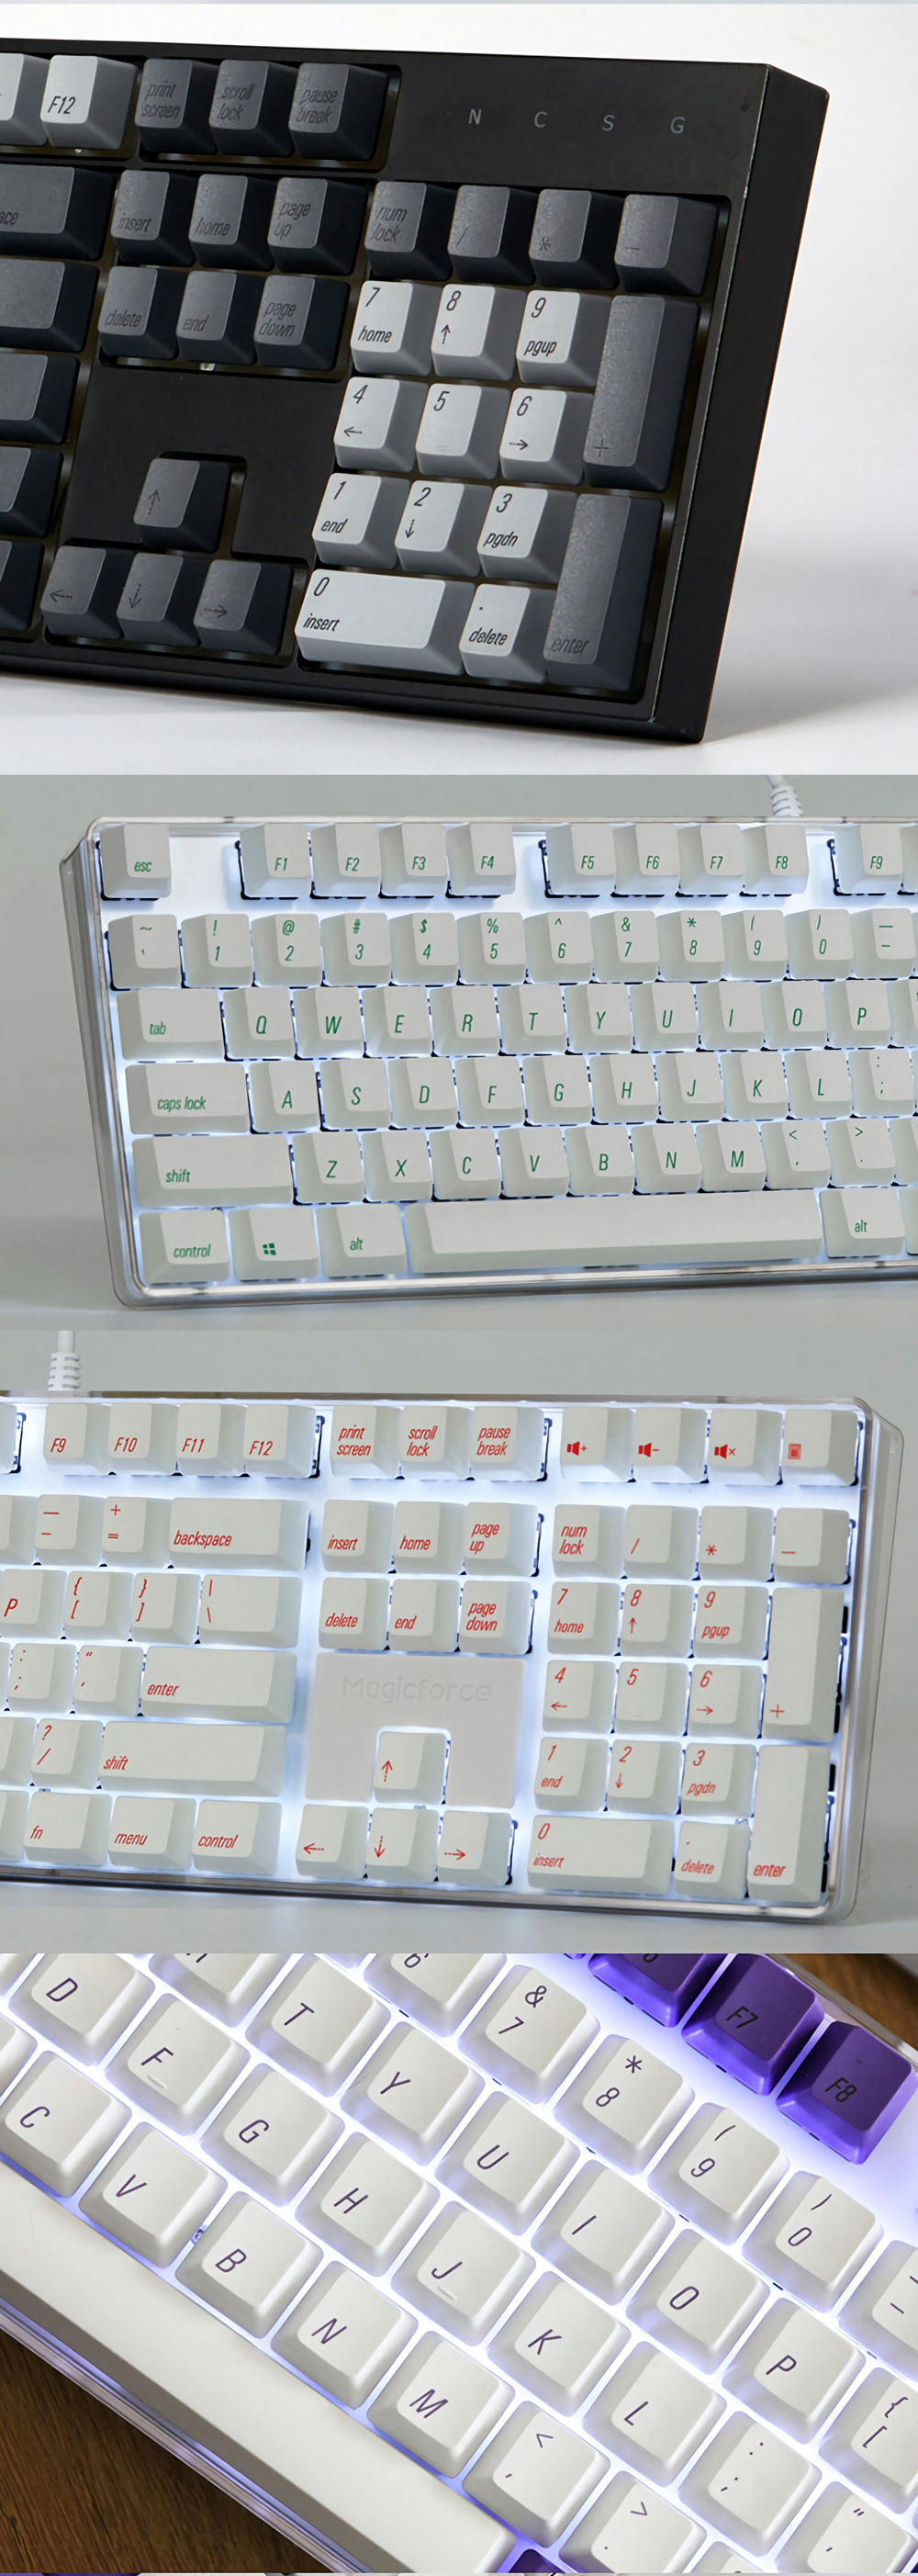 Magicforce 108 Key UV-Light Color Dye-sub PBT Keycaps Keycap Set for Mechanical Keyboard 50